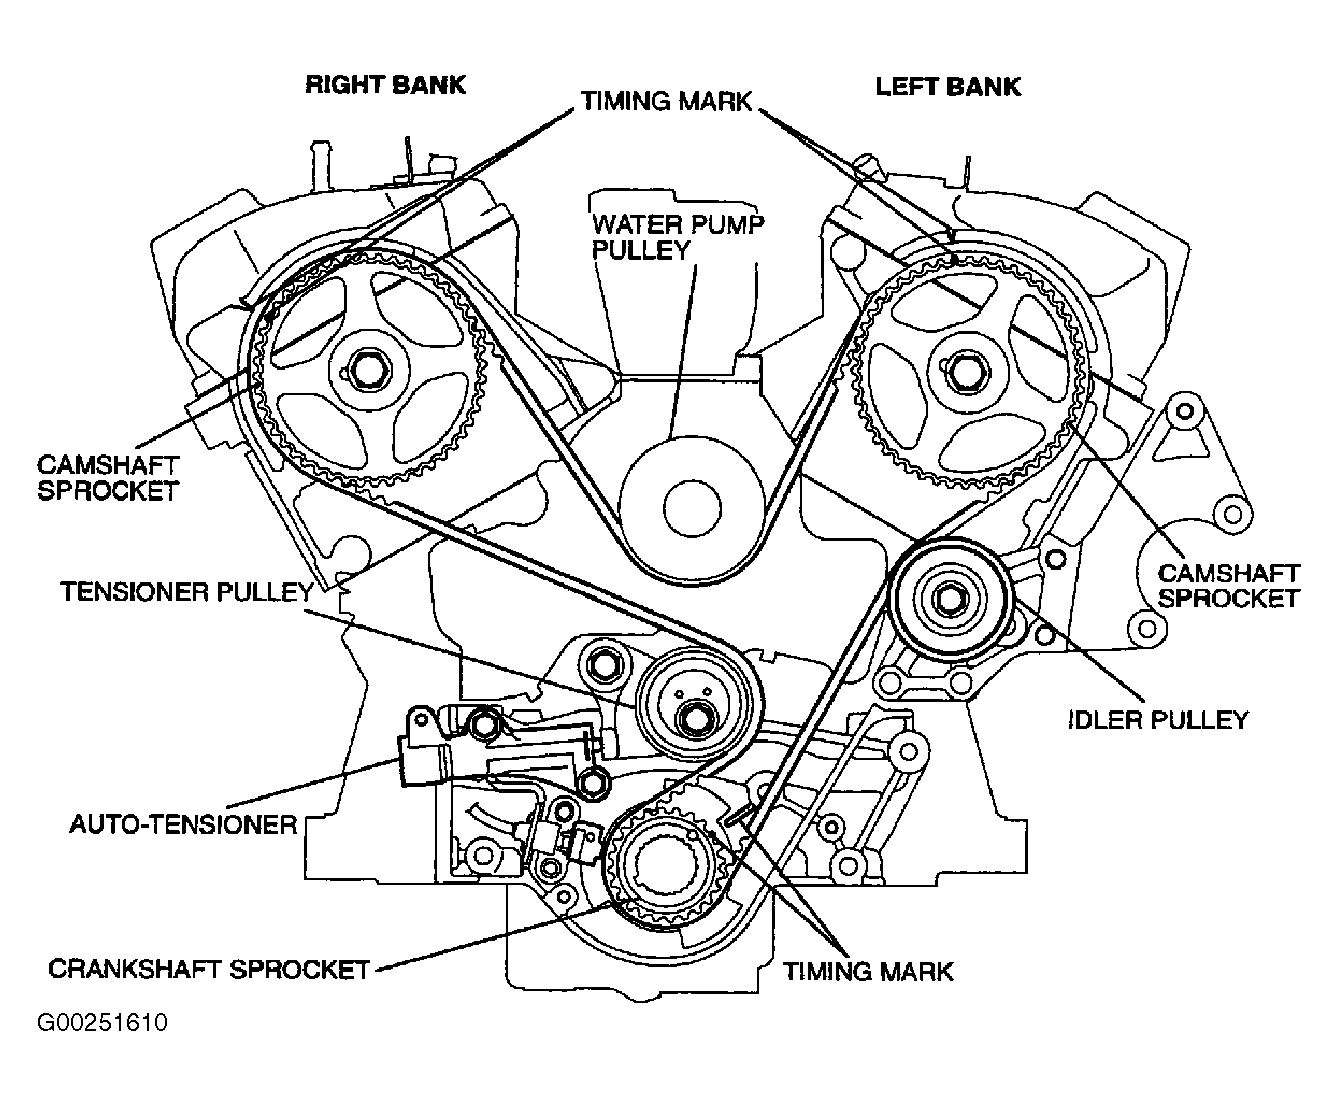 1999 Mitsubishi Diamante Serpentine Belt Routing and Timing Belt Diagrams